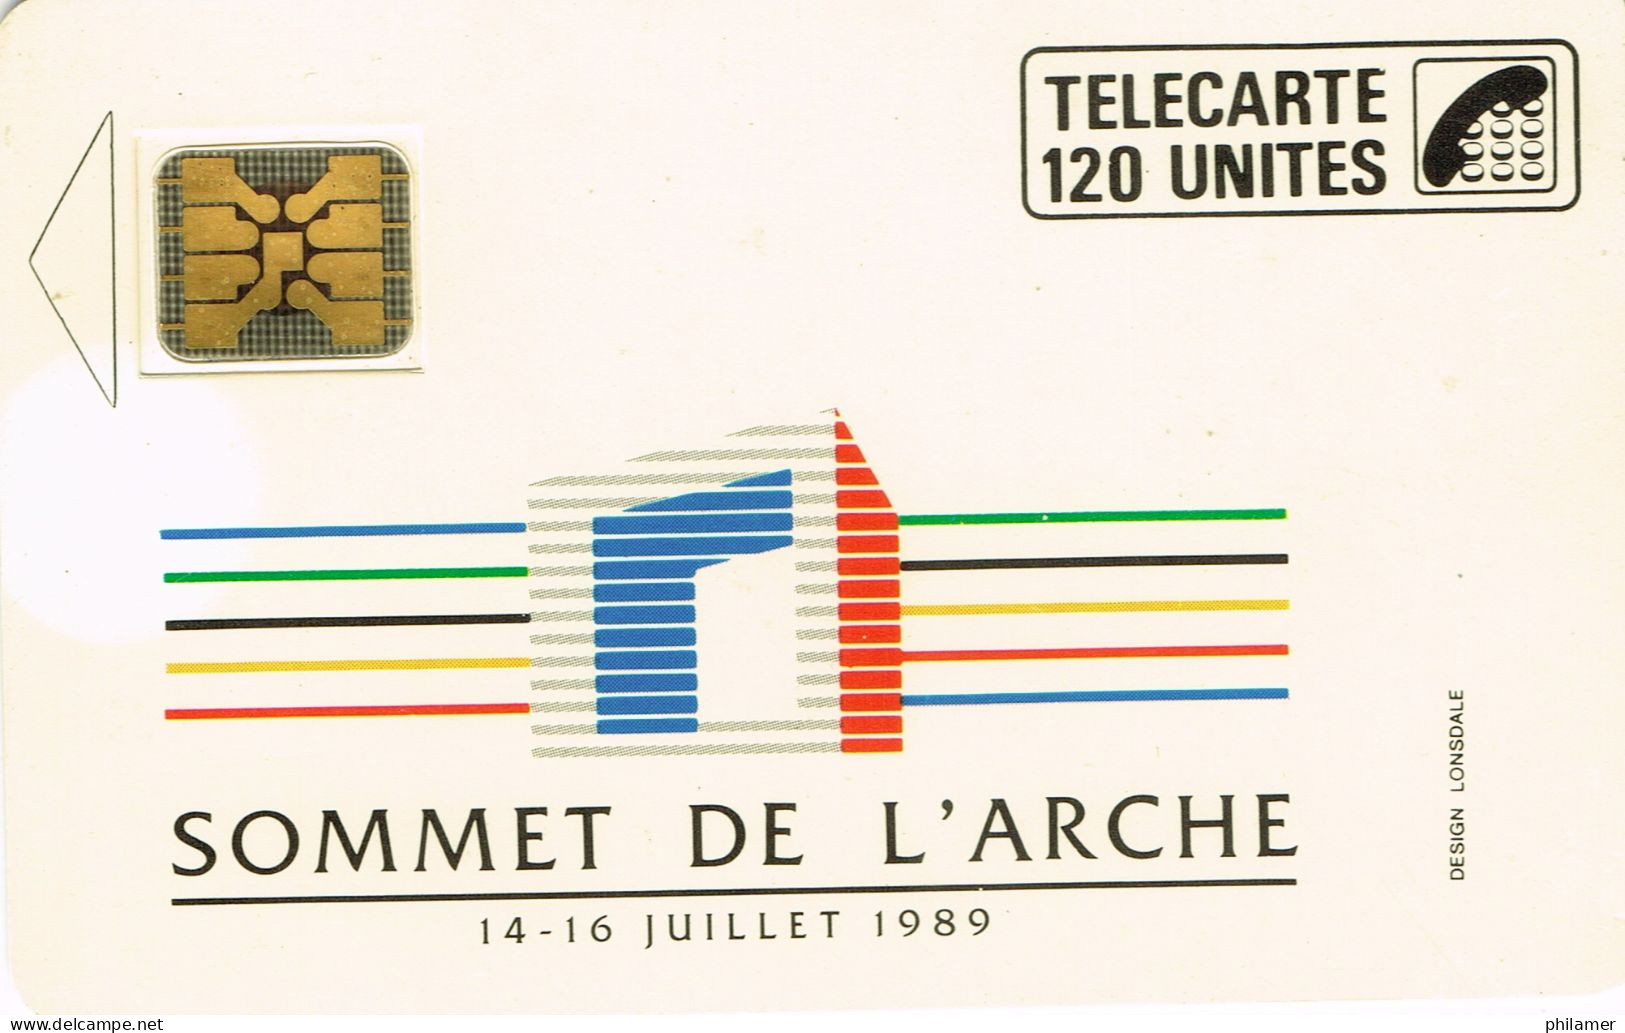 France French Telecarte Phonecard Interne C42 Sommet De L'arche 1989 France Telecom Paris UT BE - Interne Telefoonkaarten